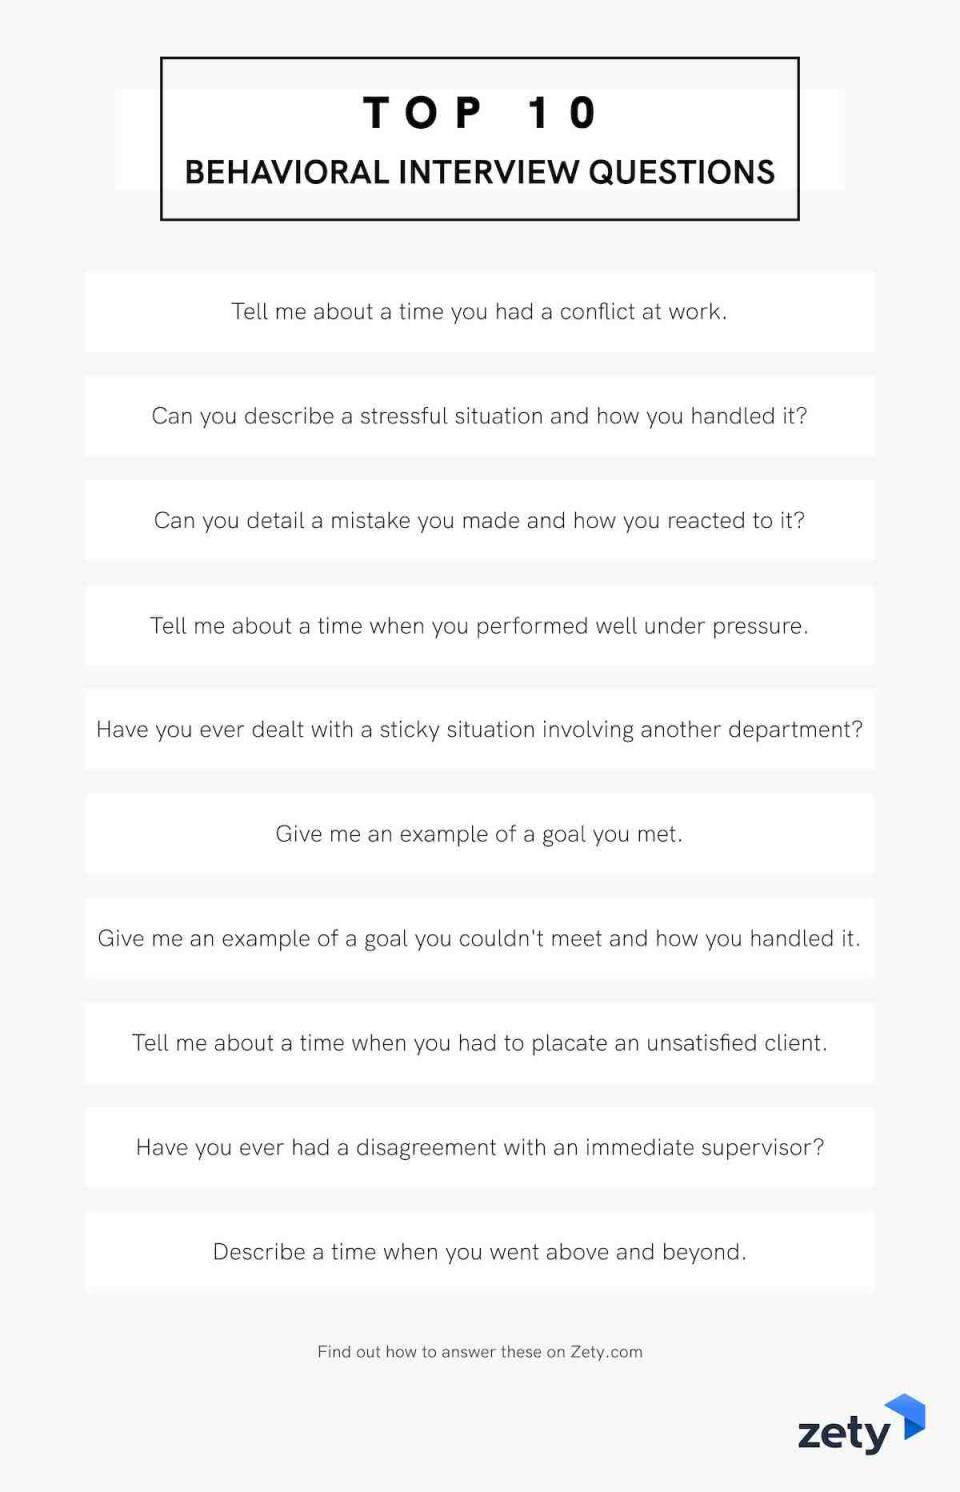 Top 10 behavioral interview questions